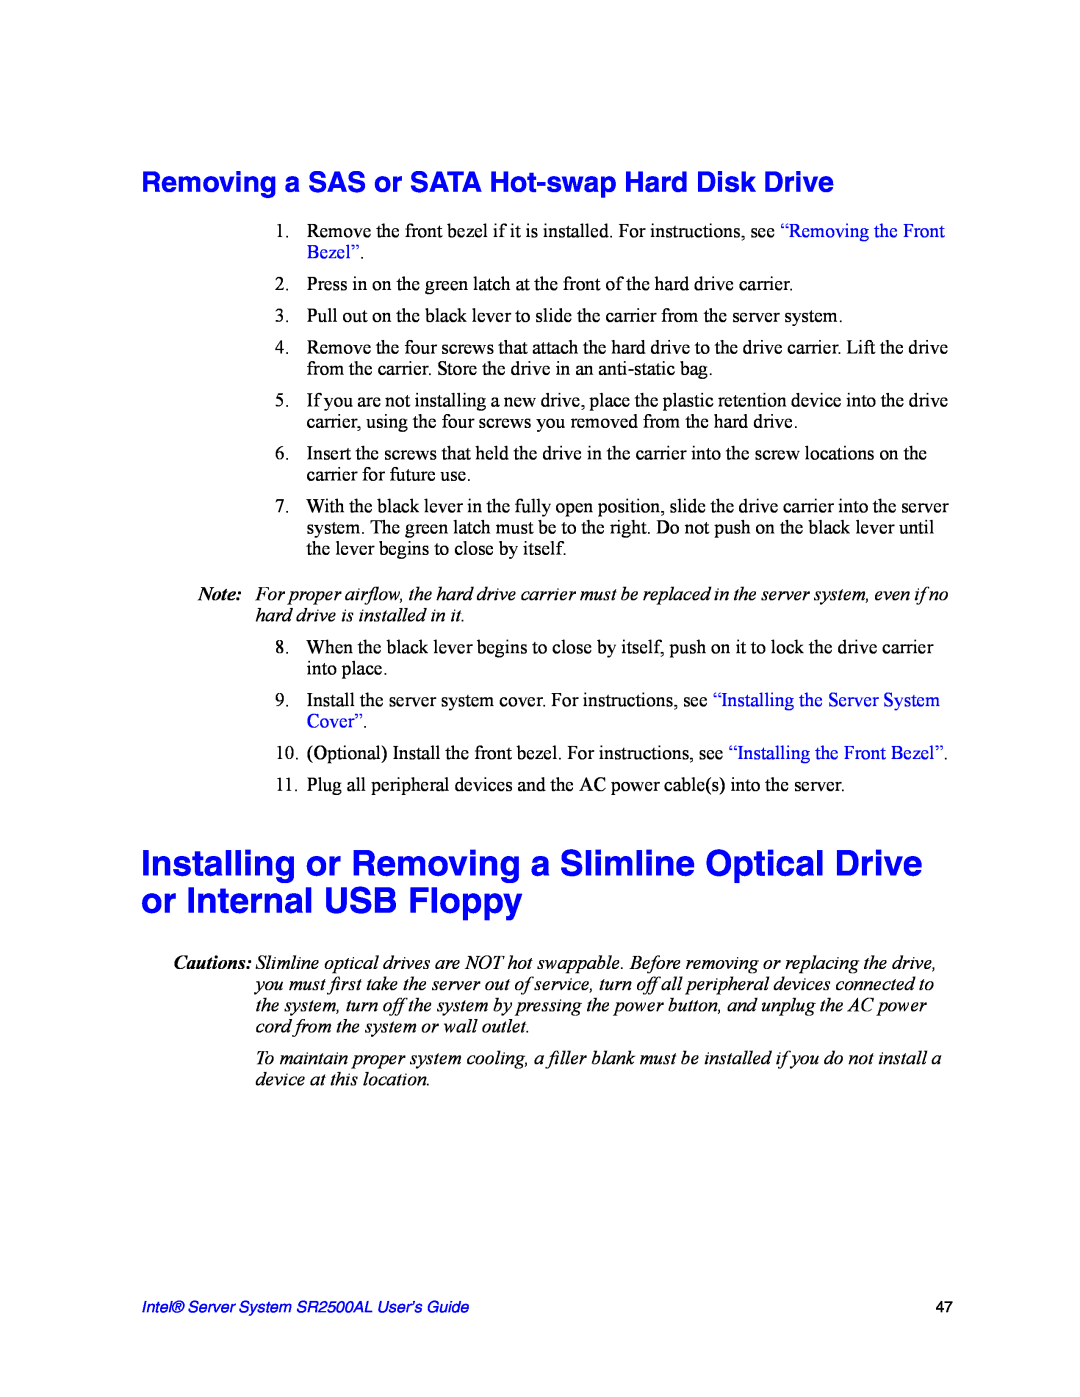 Intel SR2500AL manual Removing a SAS or SATA Hot-swap Hard Disk Drive 